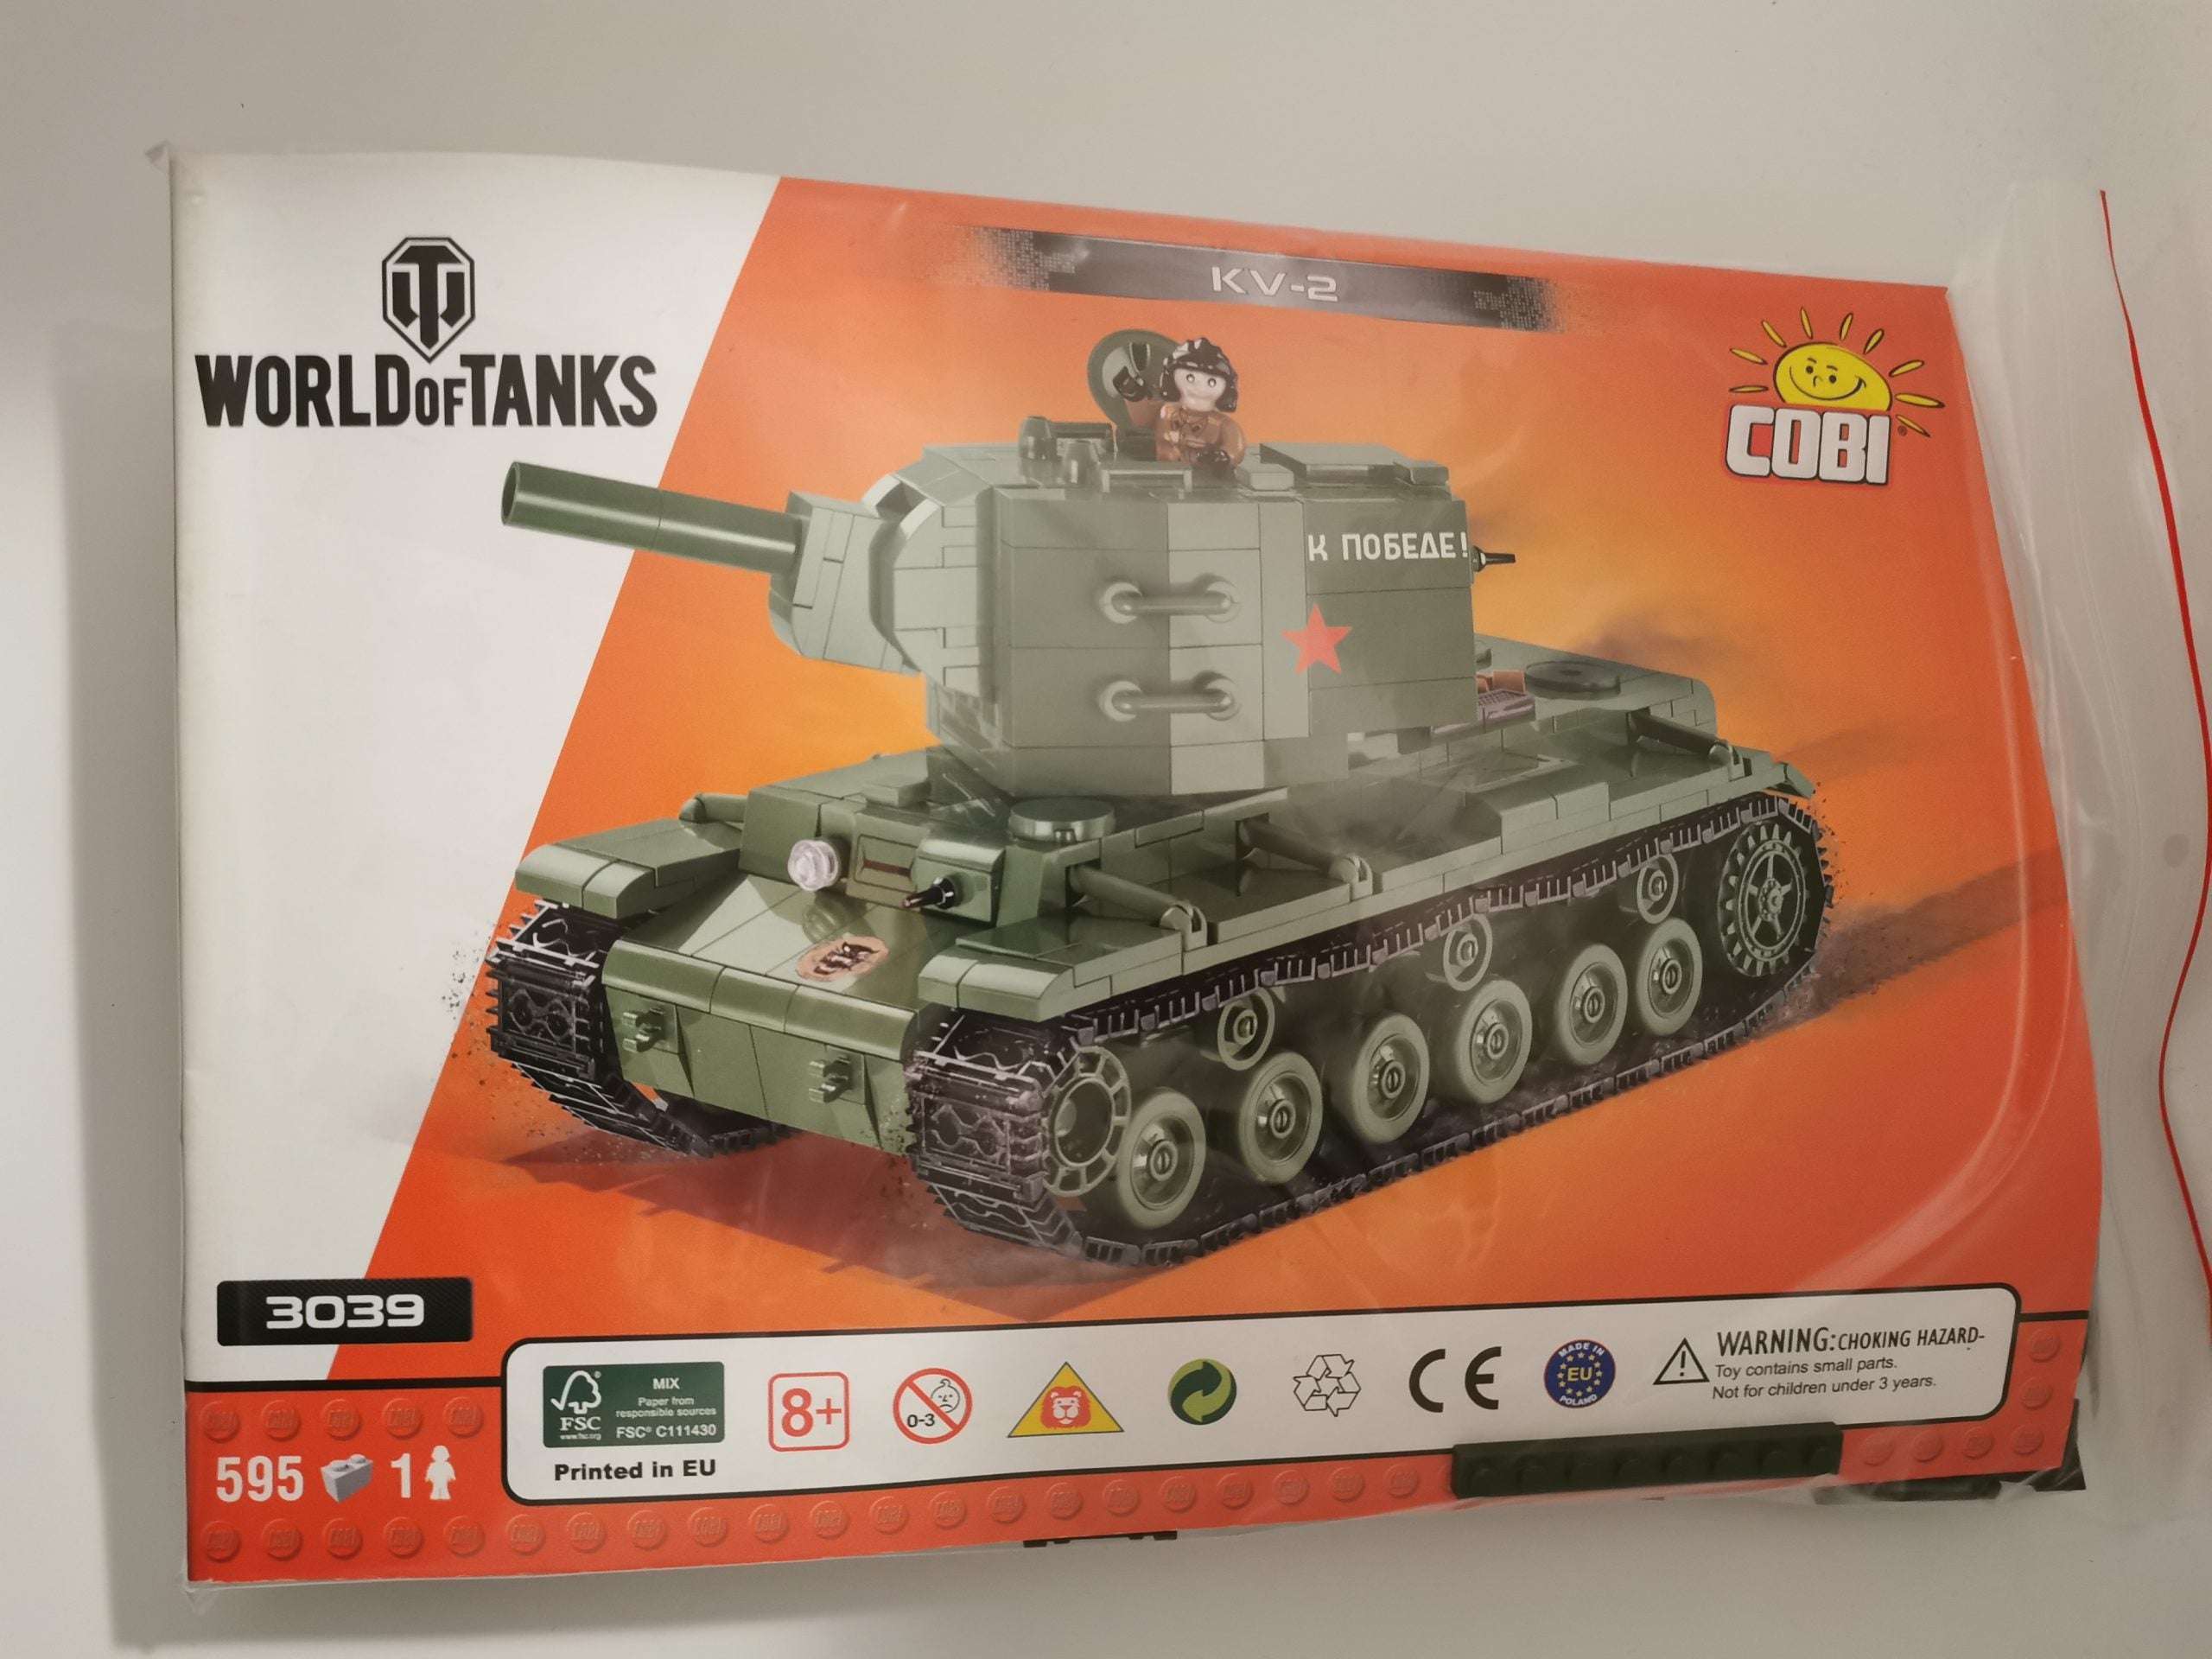 Cobi 3039 KV2 (World of Tanks) gebraucht